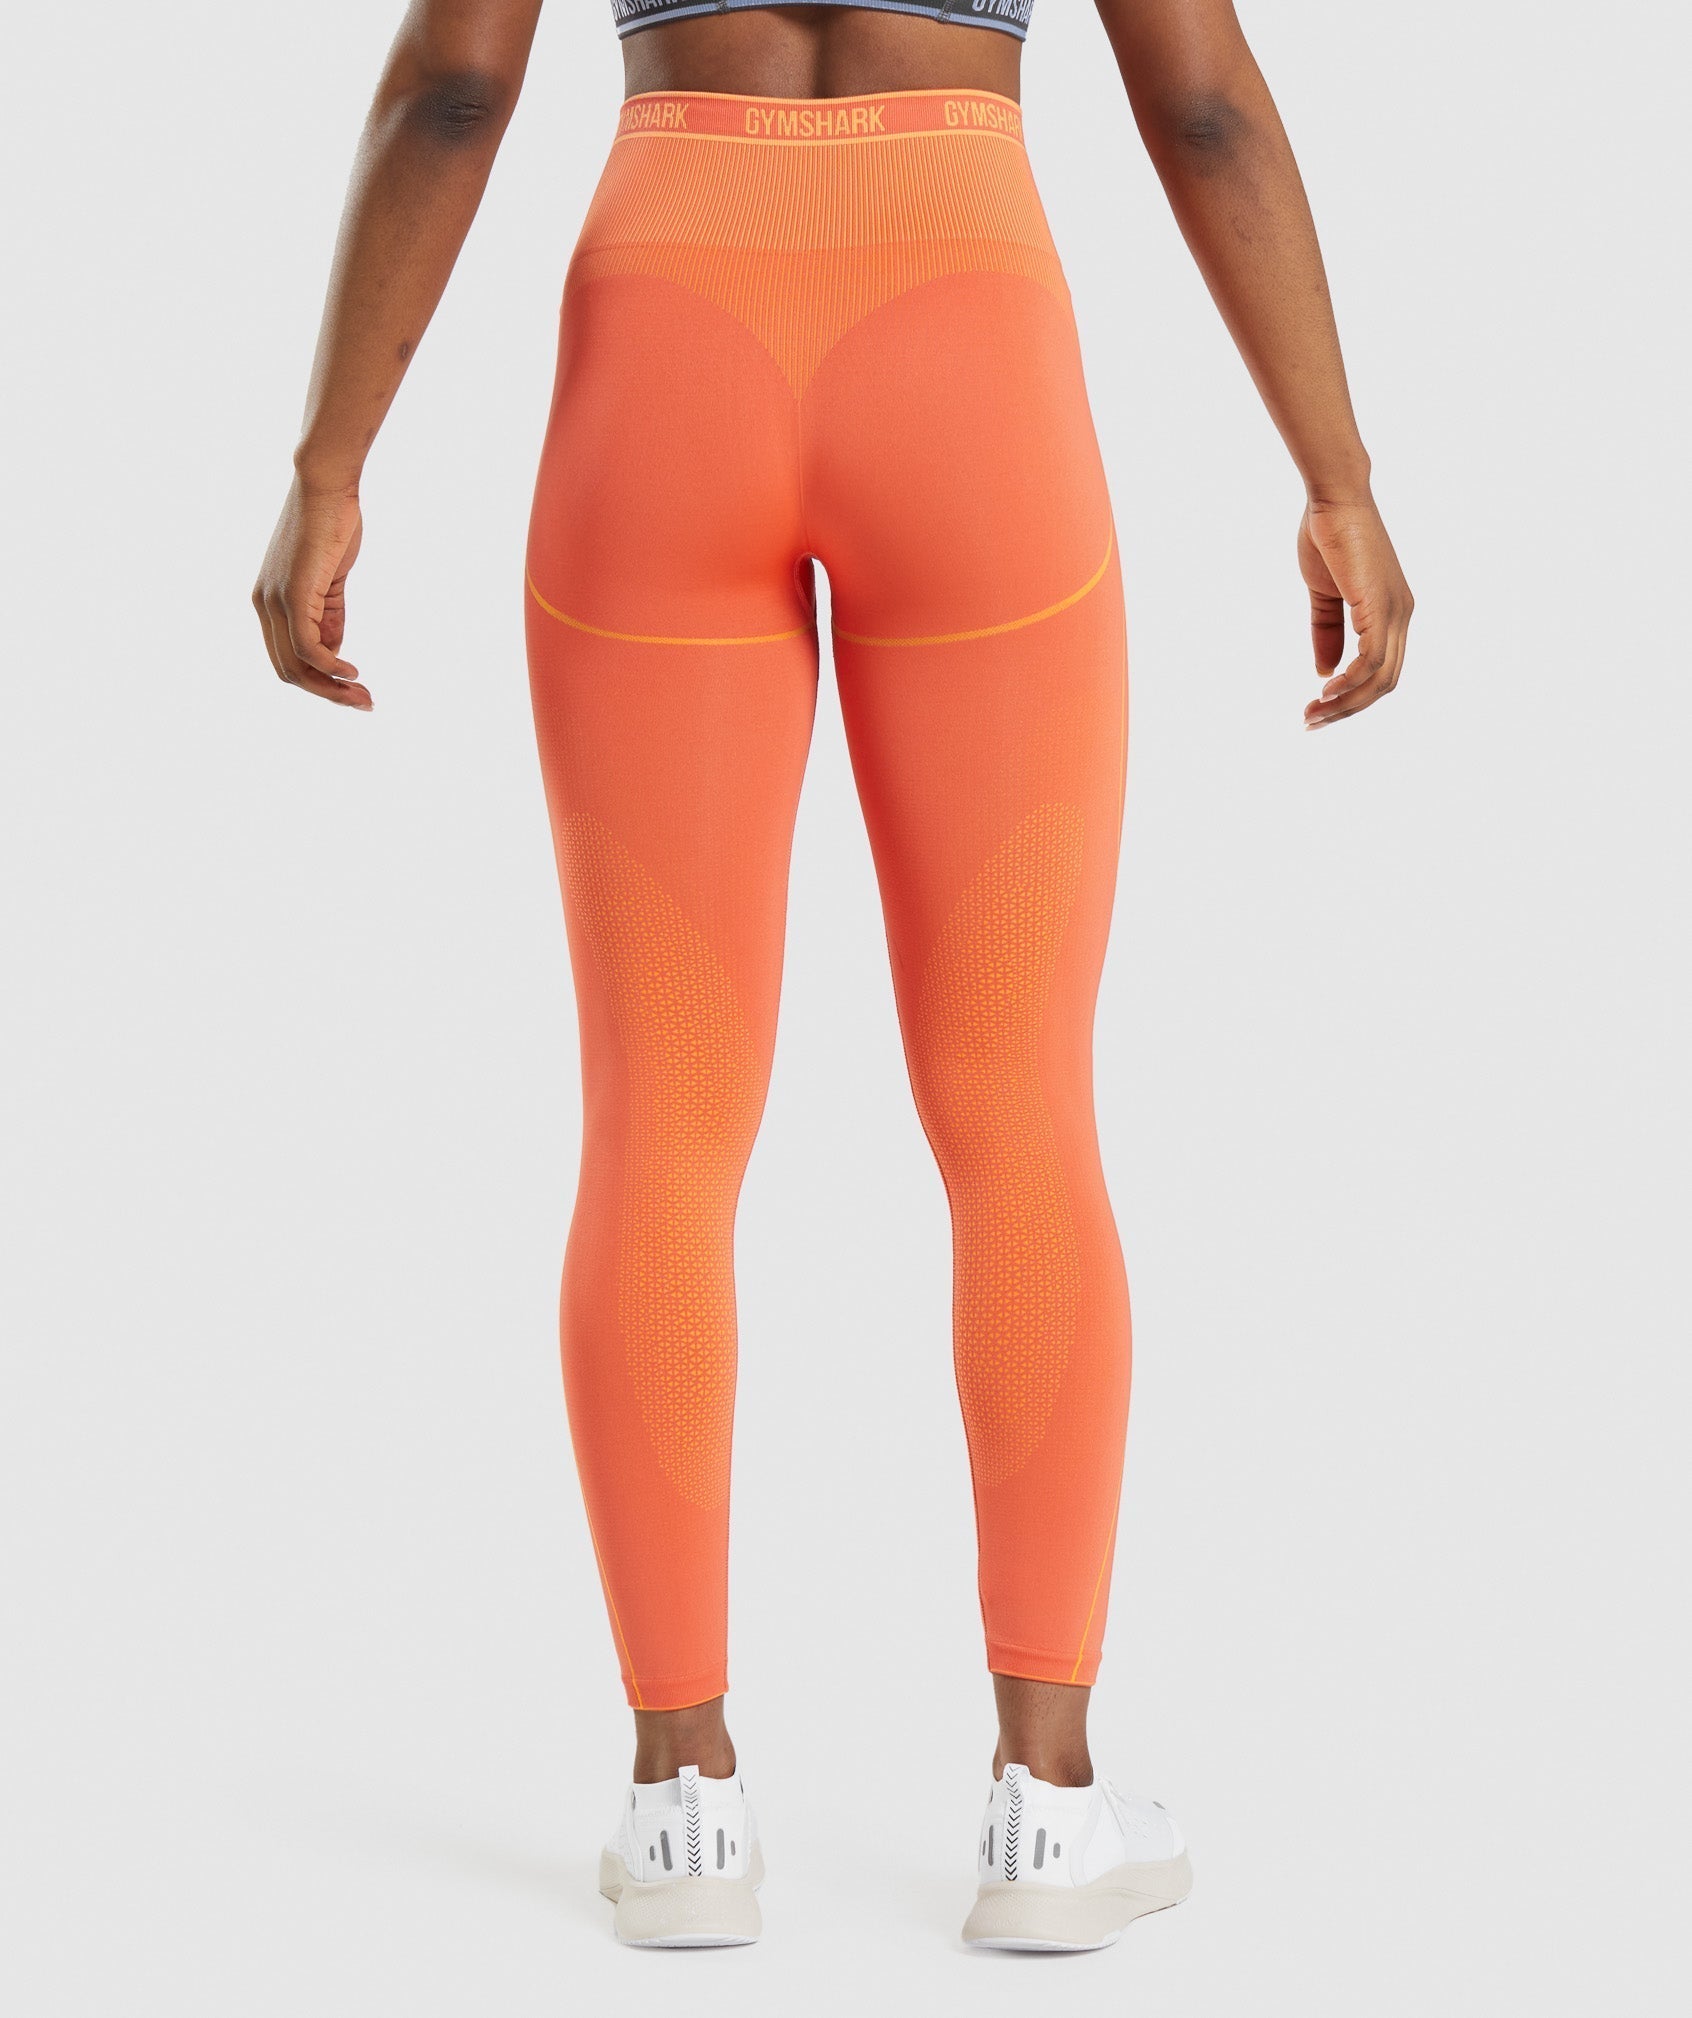 Gymshark Vital Seamless Leggings Orange Size XS - $29 (51% Off